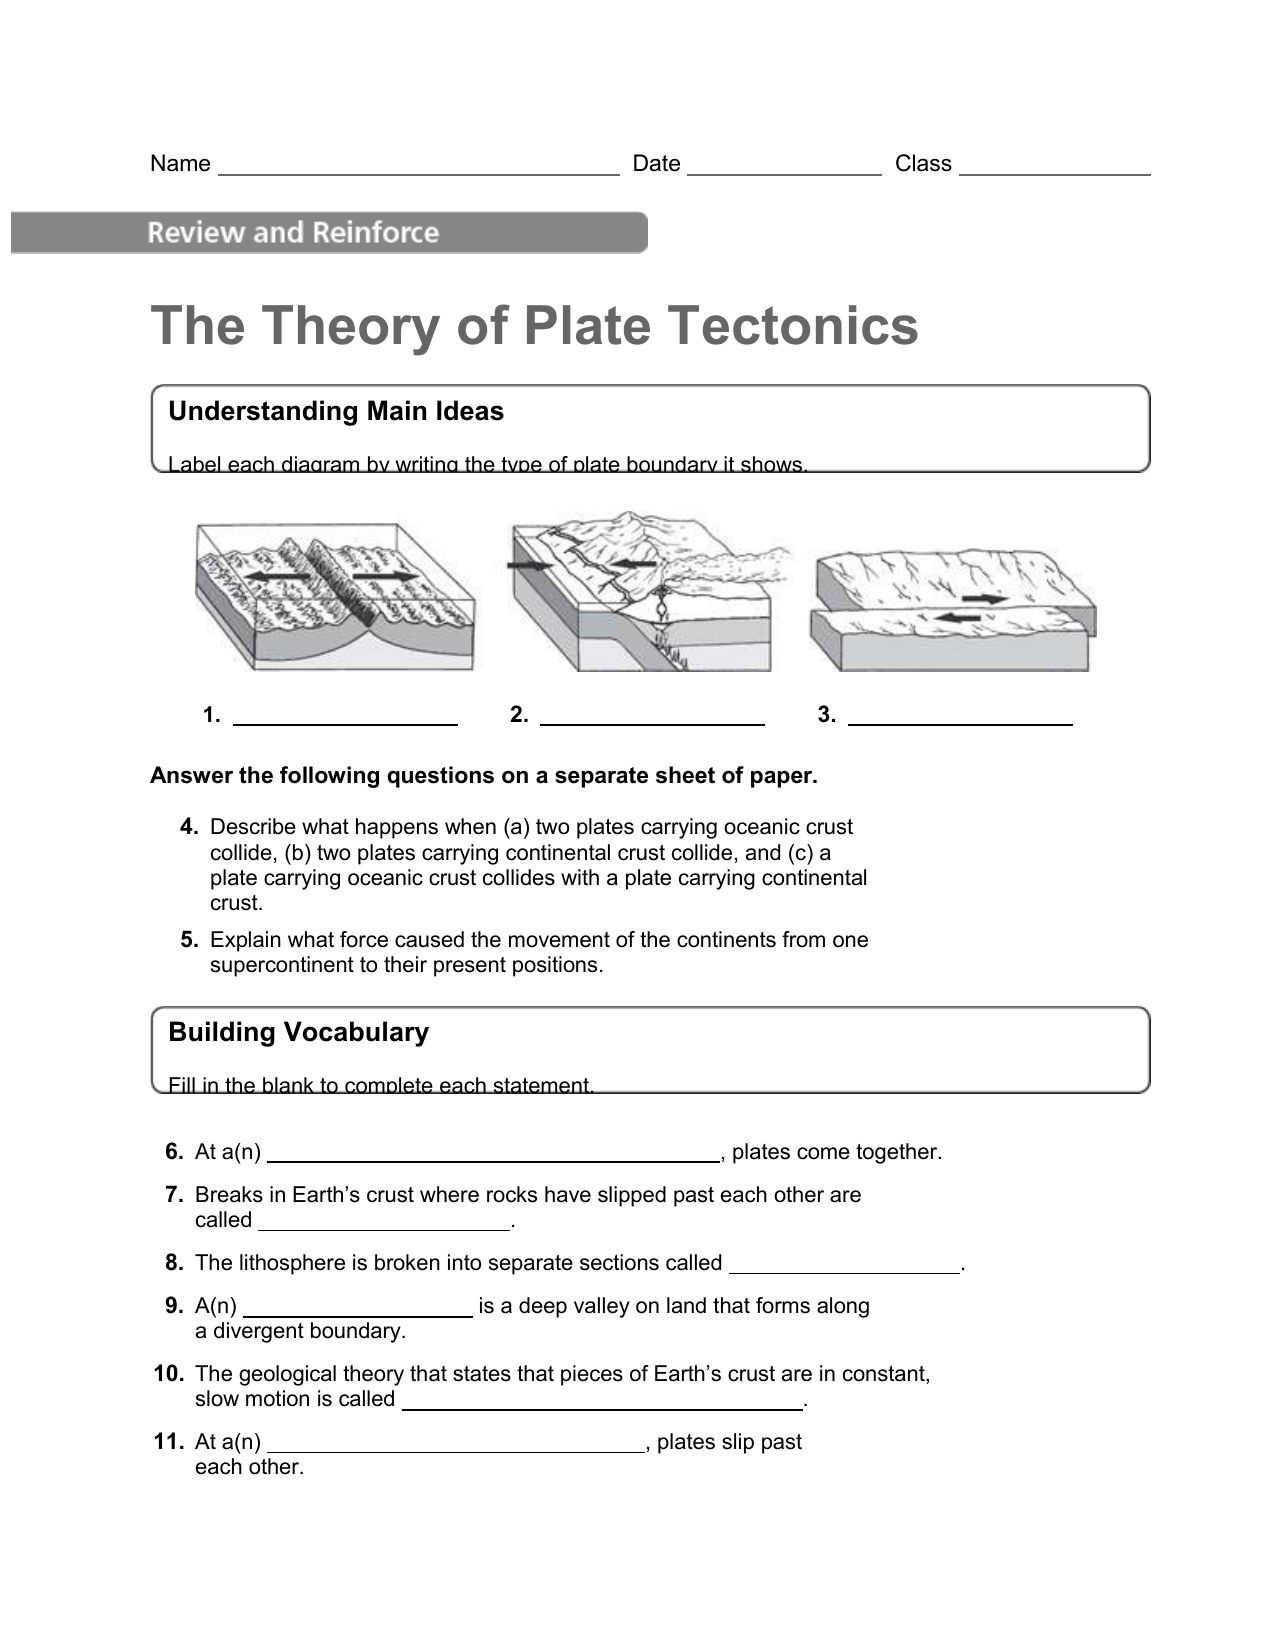 The Theory of Plate Tectonics Homework Inside Plate Tectonic Worksheet Answers